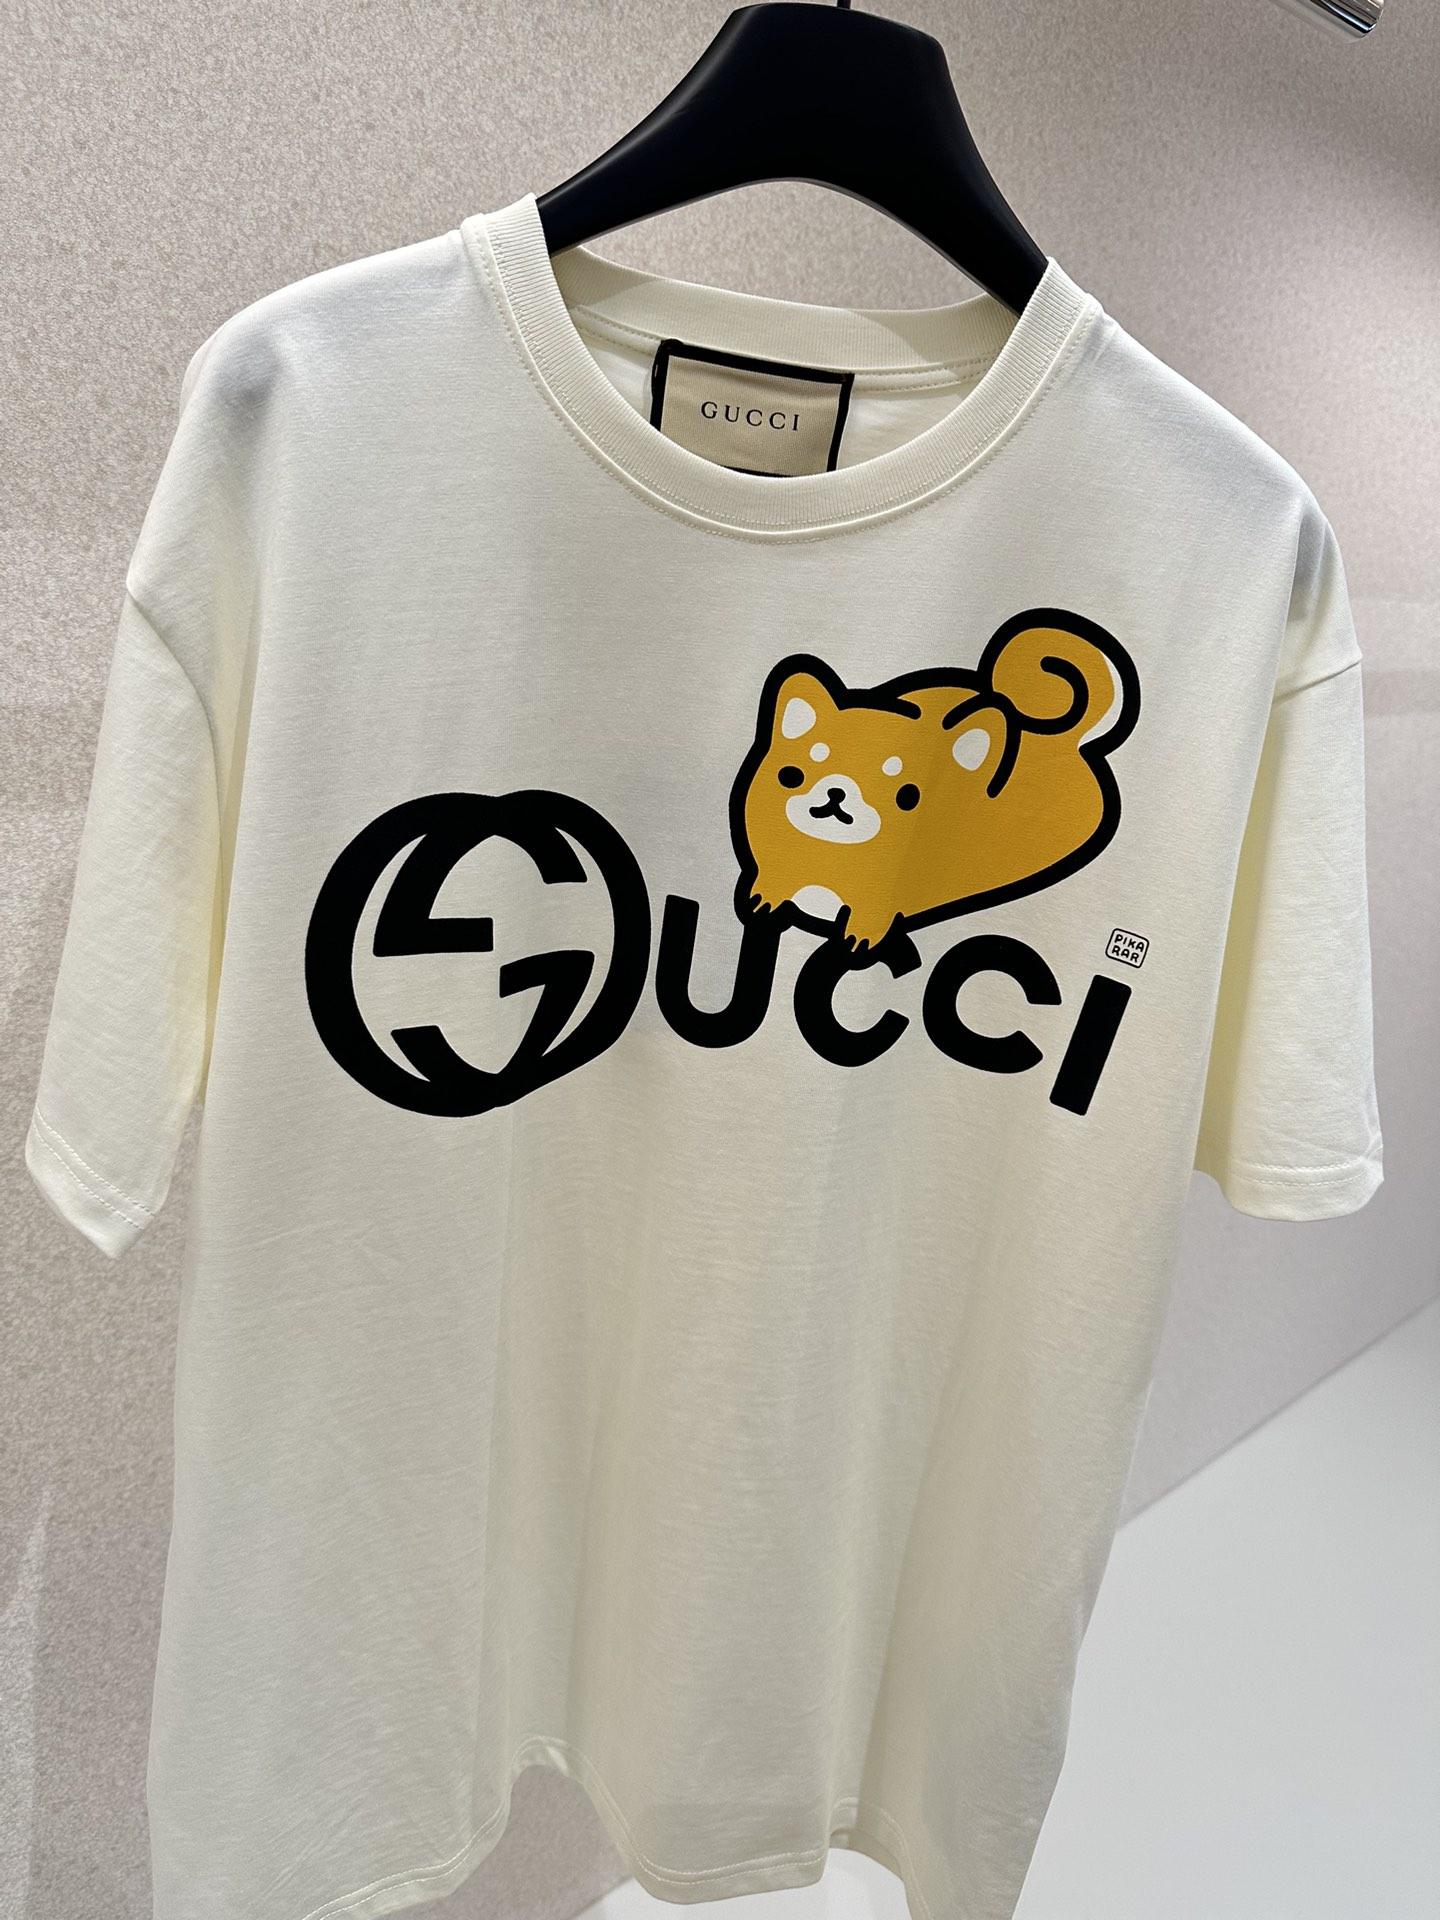 gucci-animal-print-cotton-t-shirt-7220_16845021114-1000